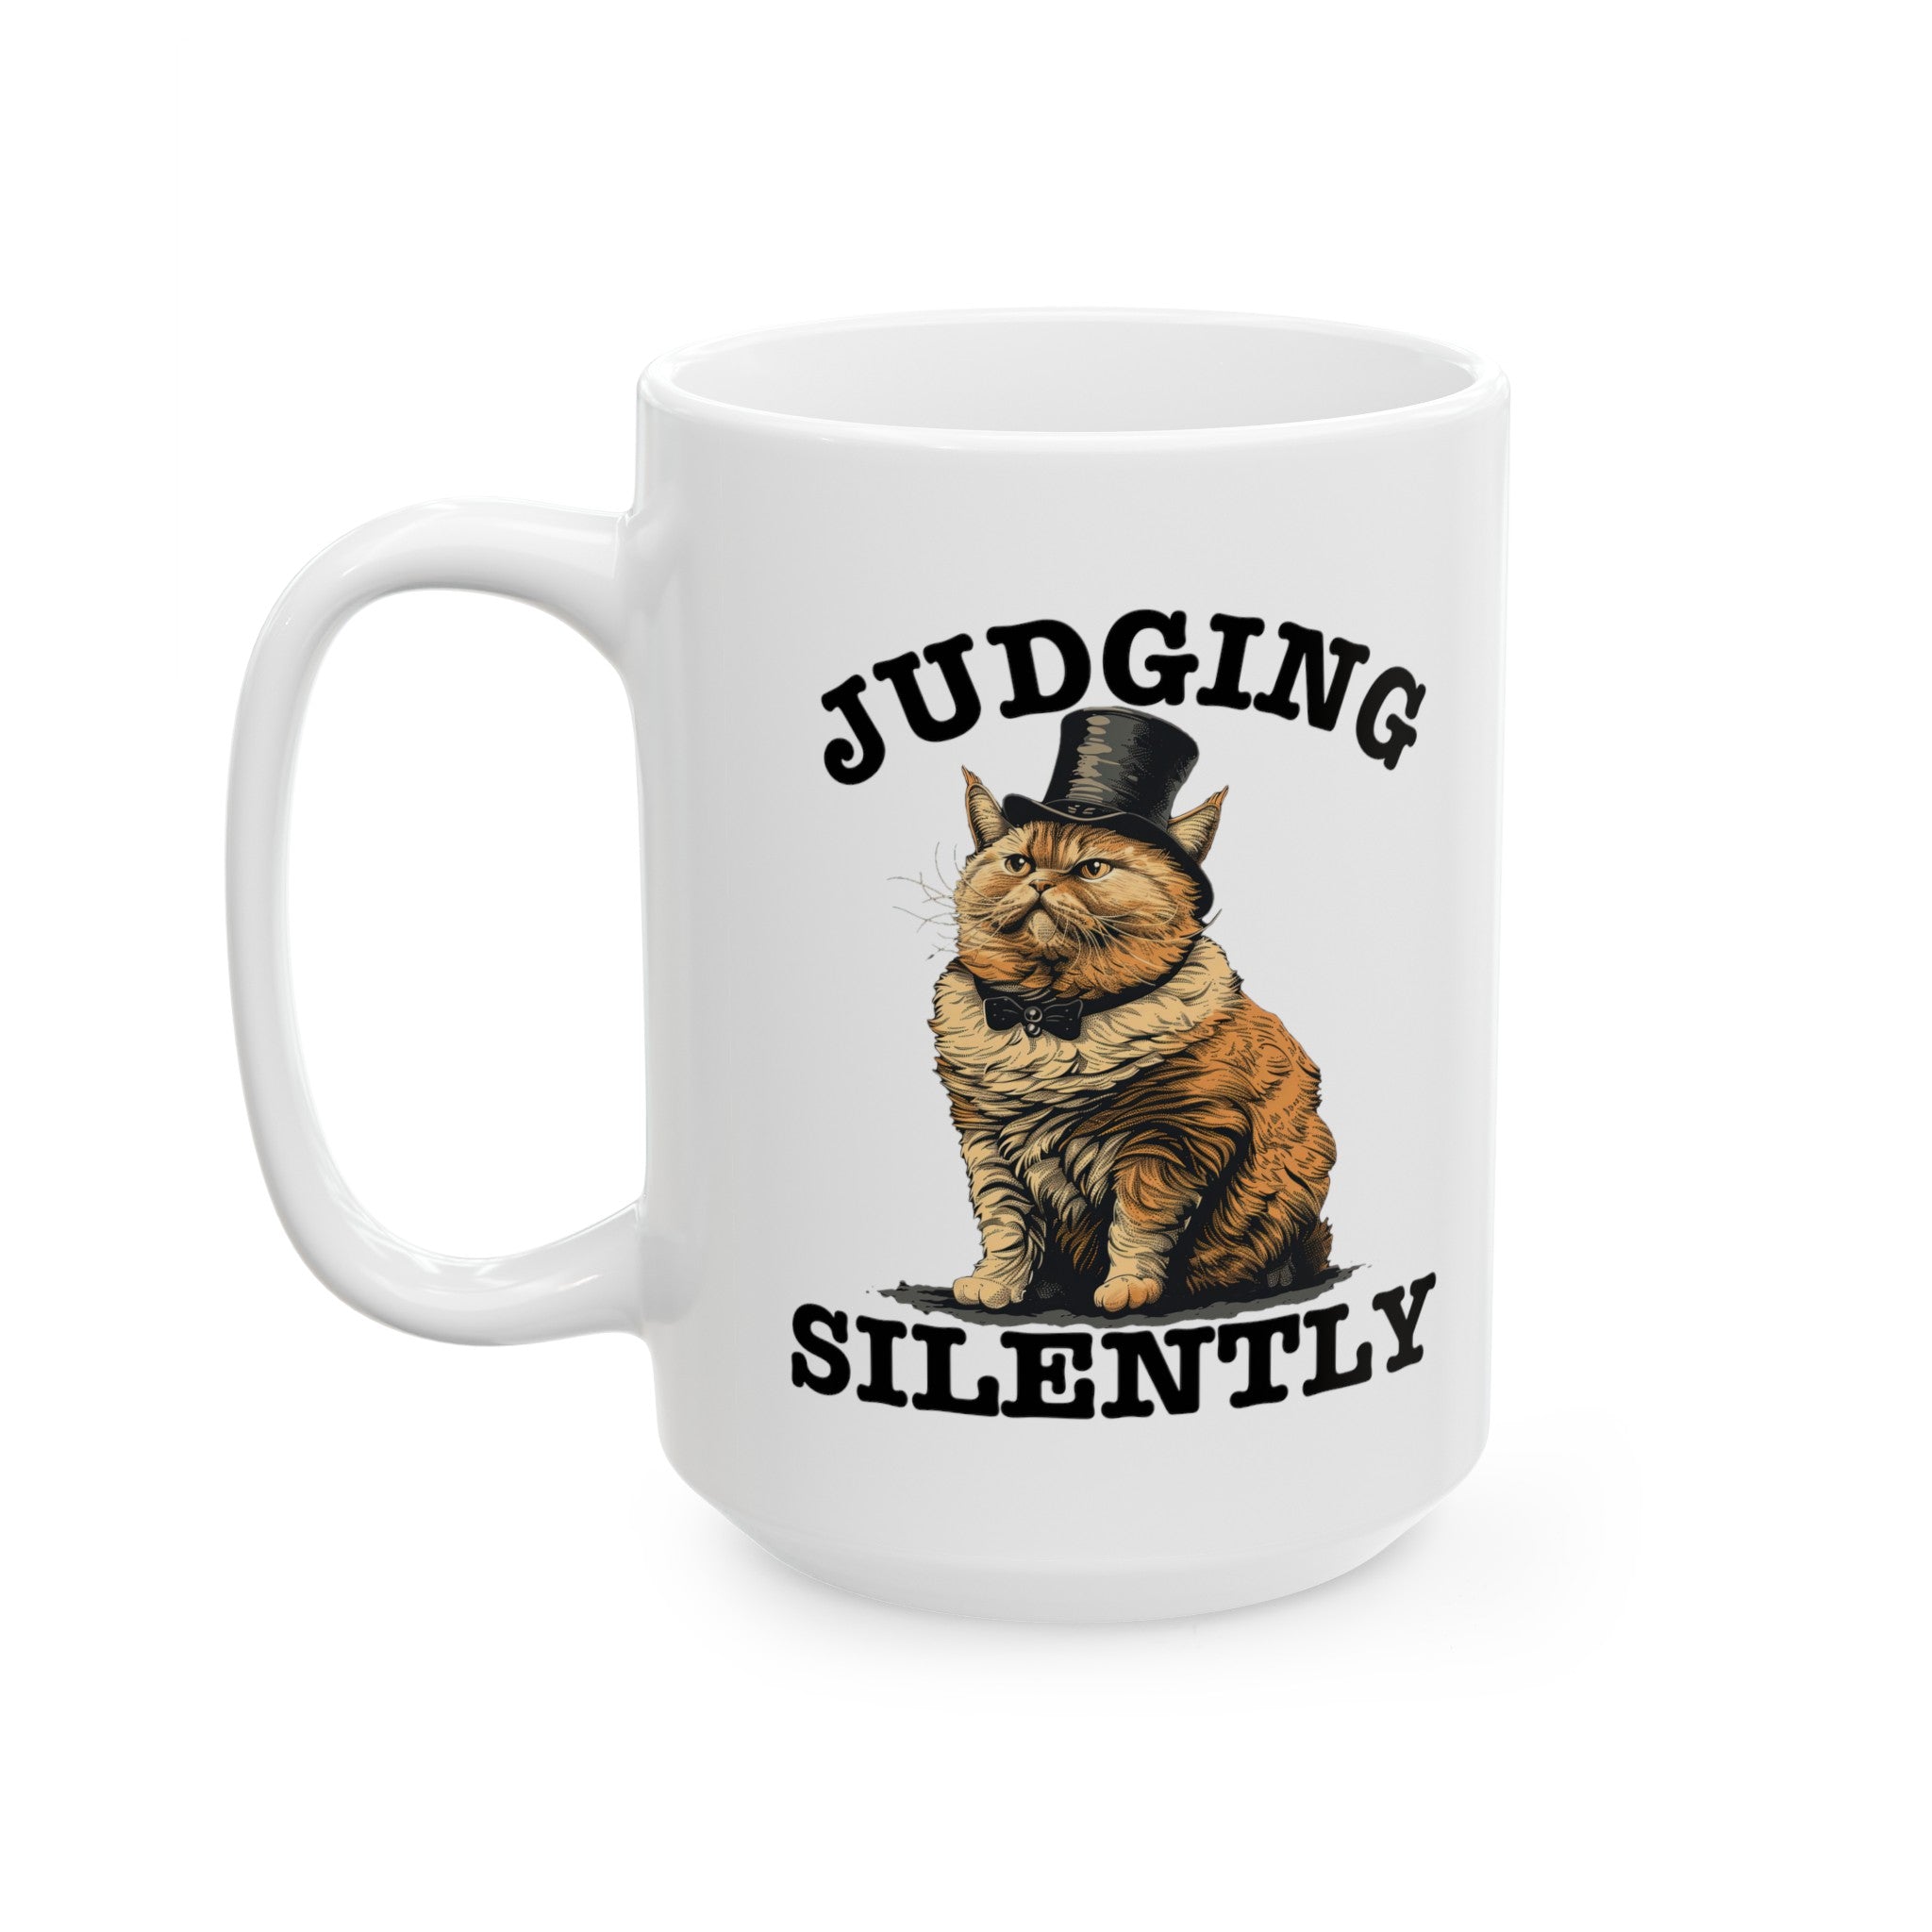 Judging Silently Cat Mug